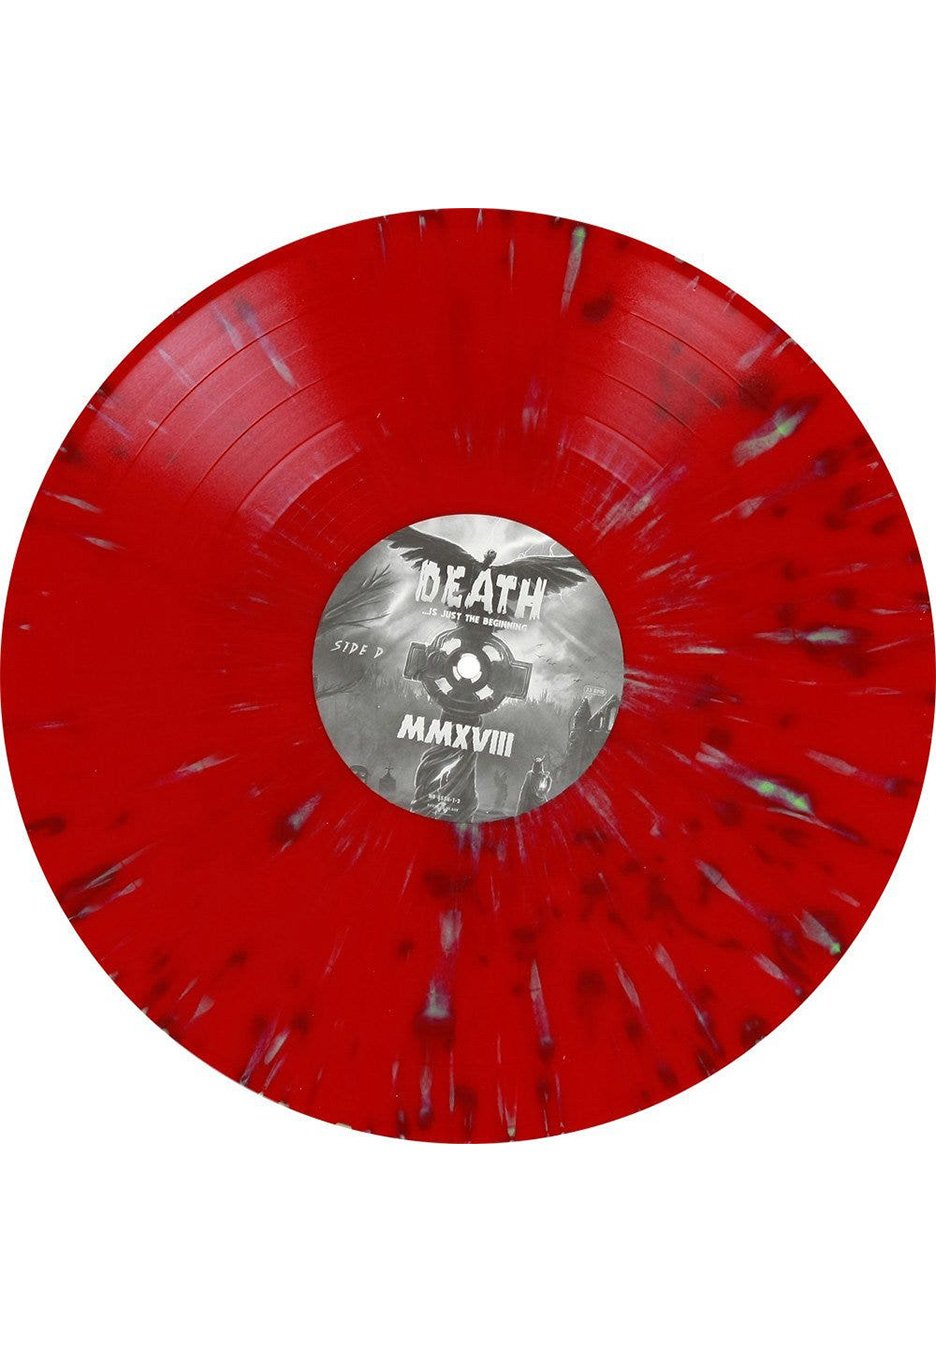 V.A. - Death ...Is Just The Beginning Mmxviii Green/Red - Splattered 2 Vinyl